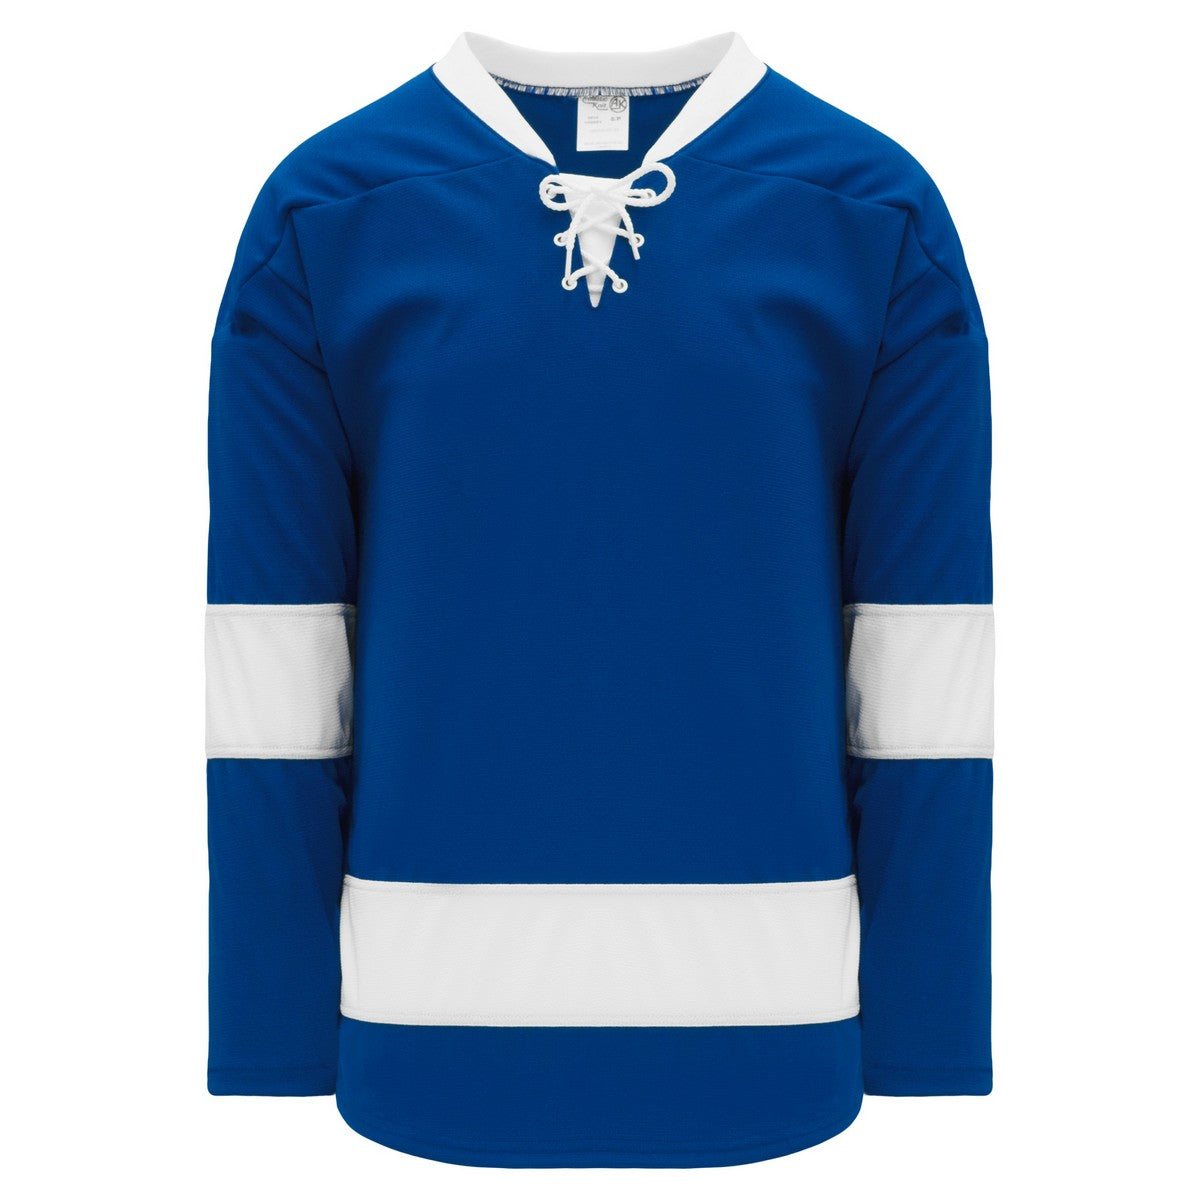 Replica Premier Style Tampa Bay Lightning Blue Hockey Jersey